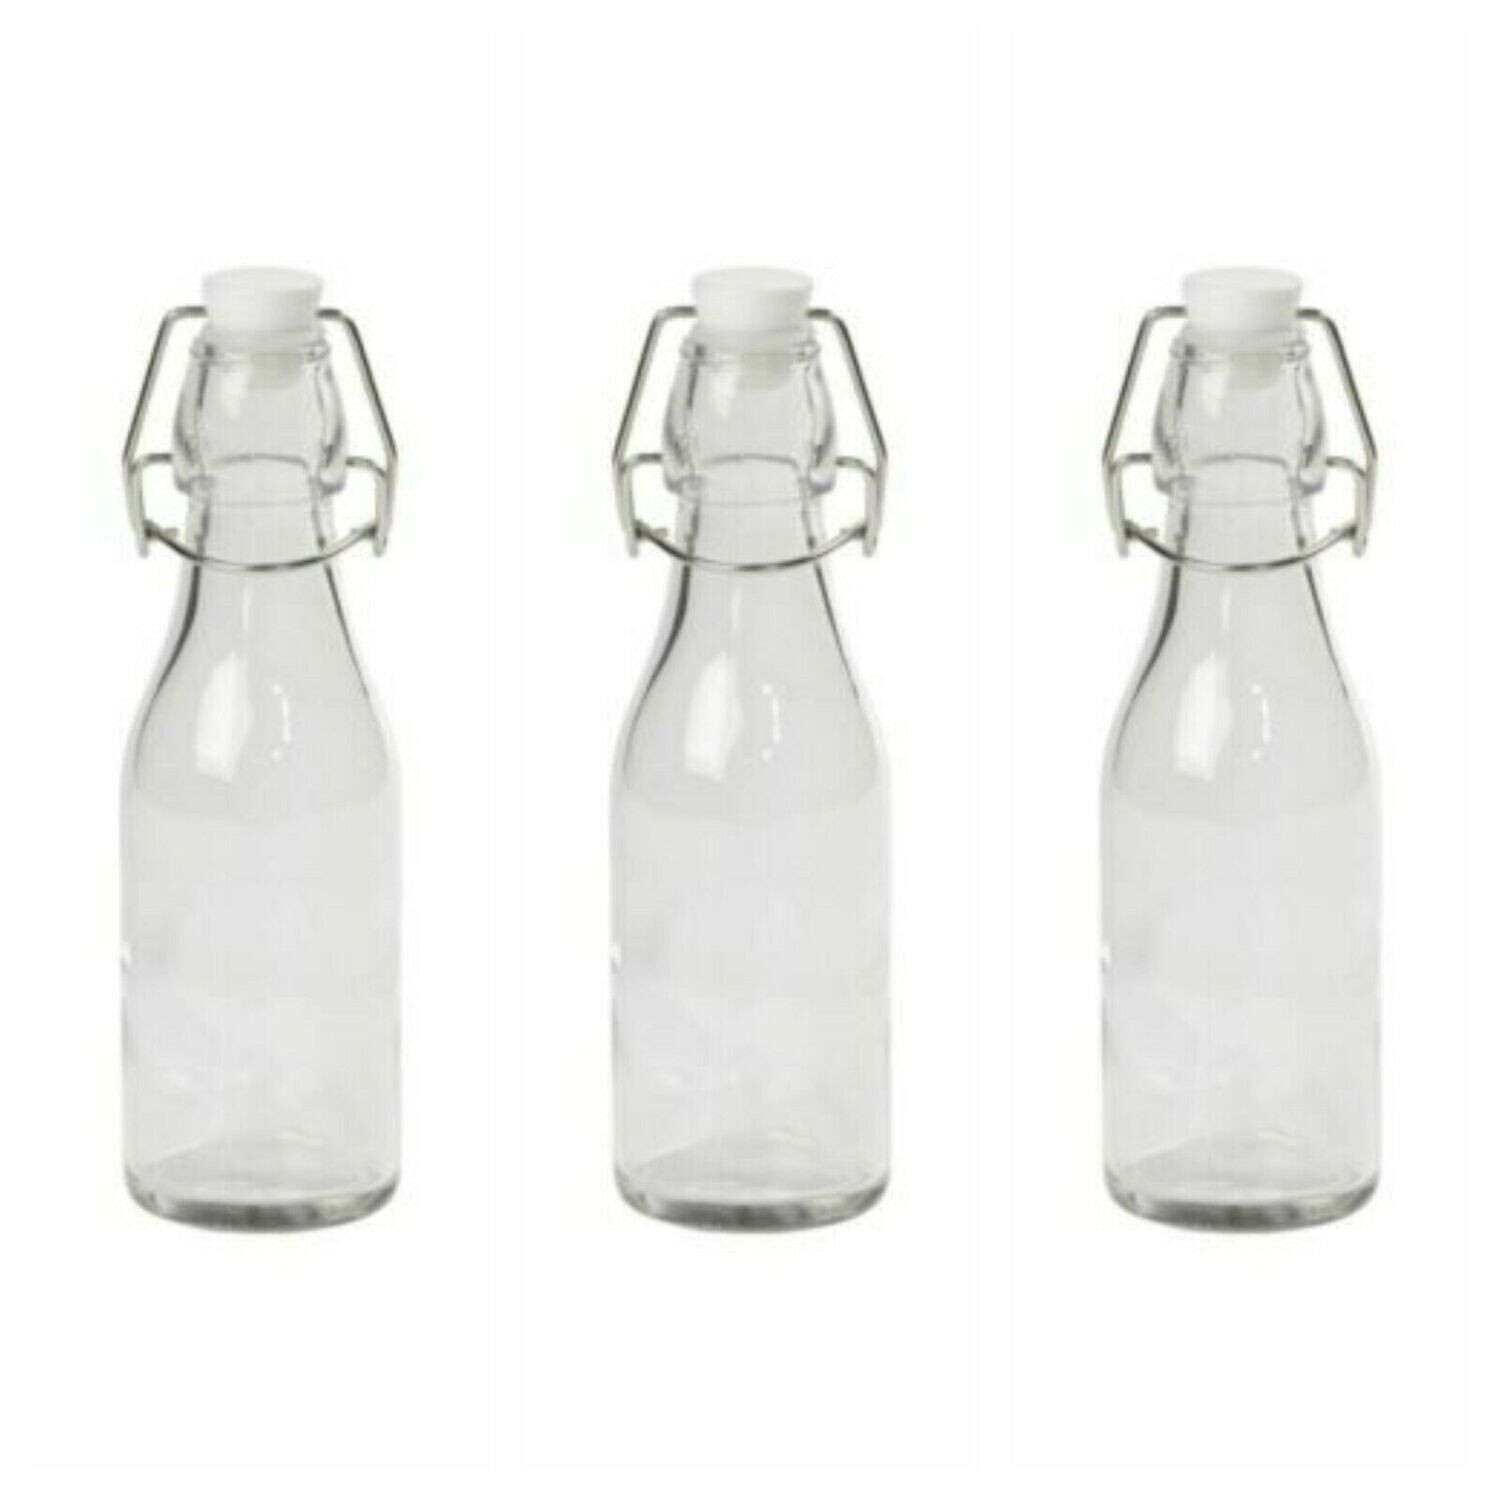 3 x 270ml Tala Glass Bottles 6cm x 19.8cm